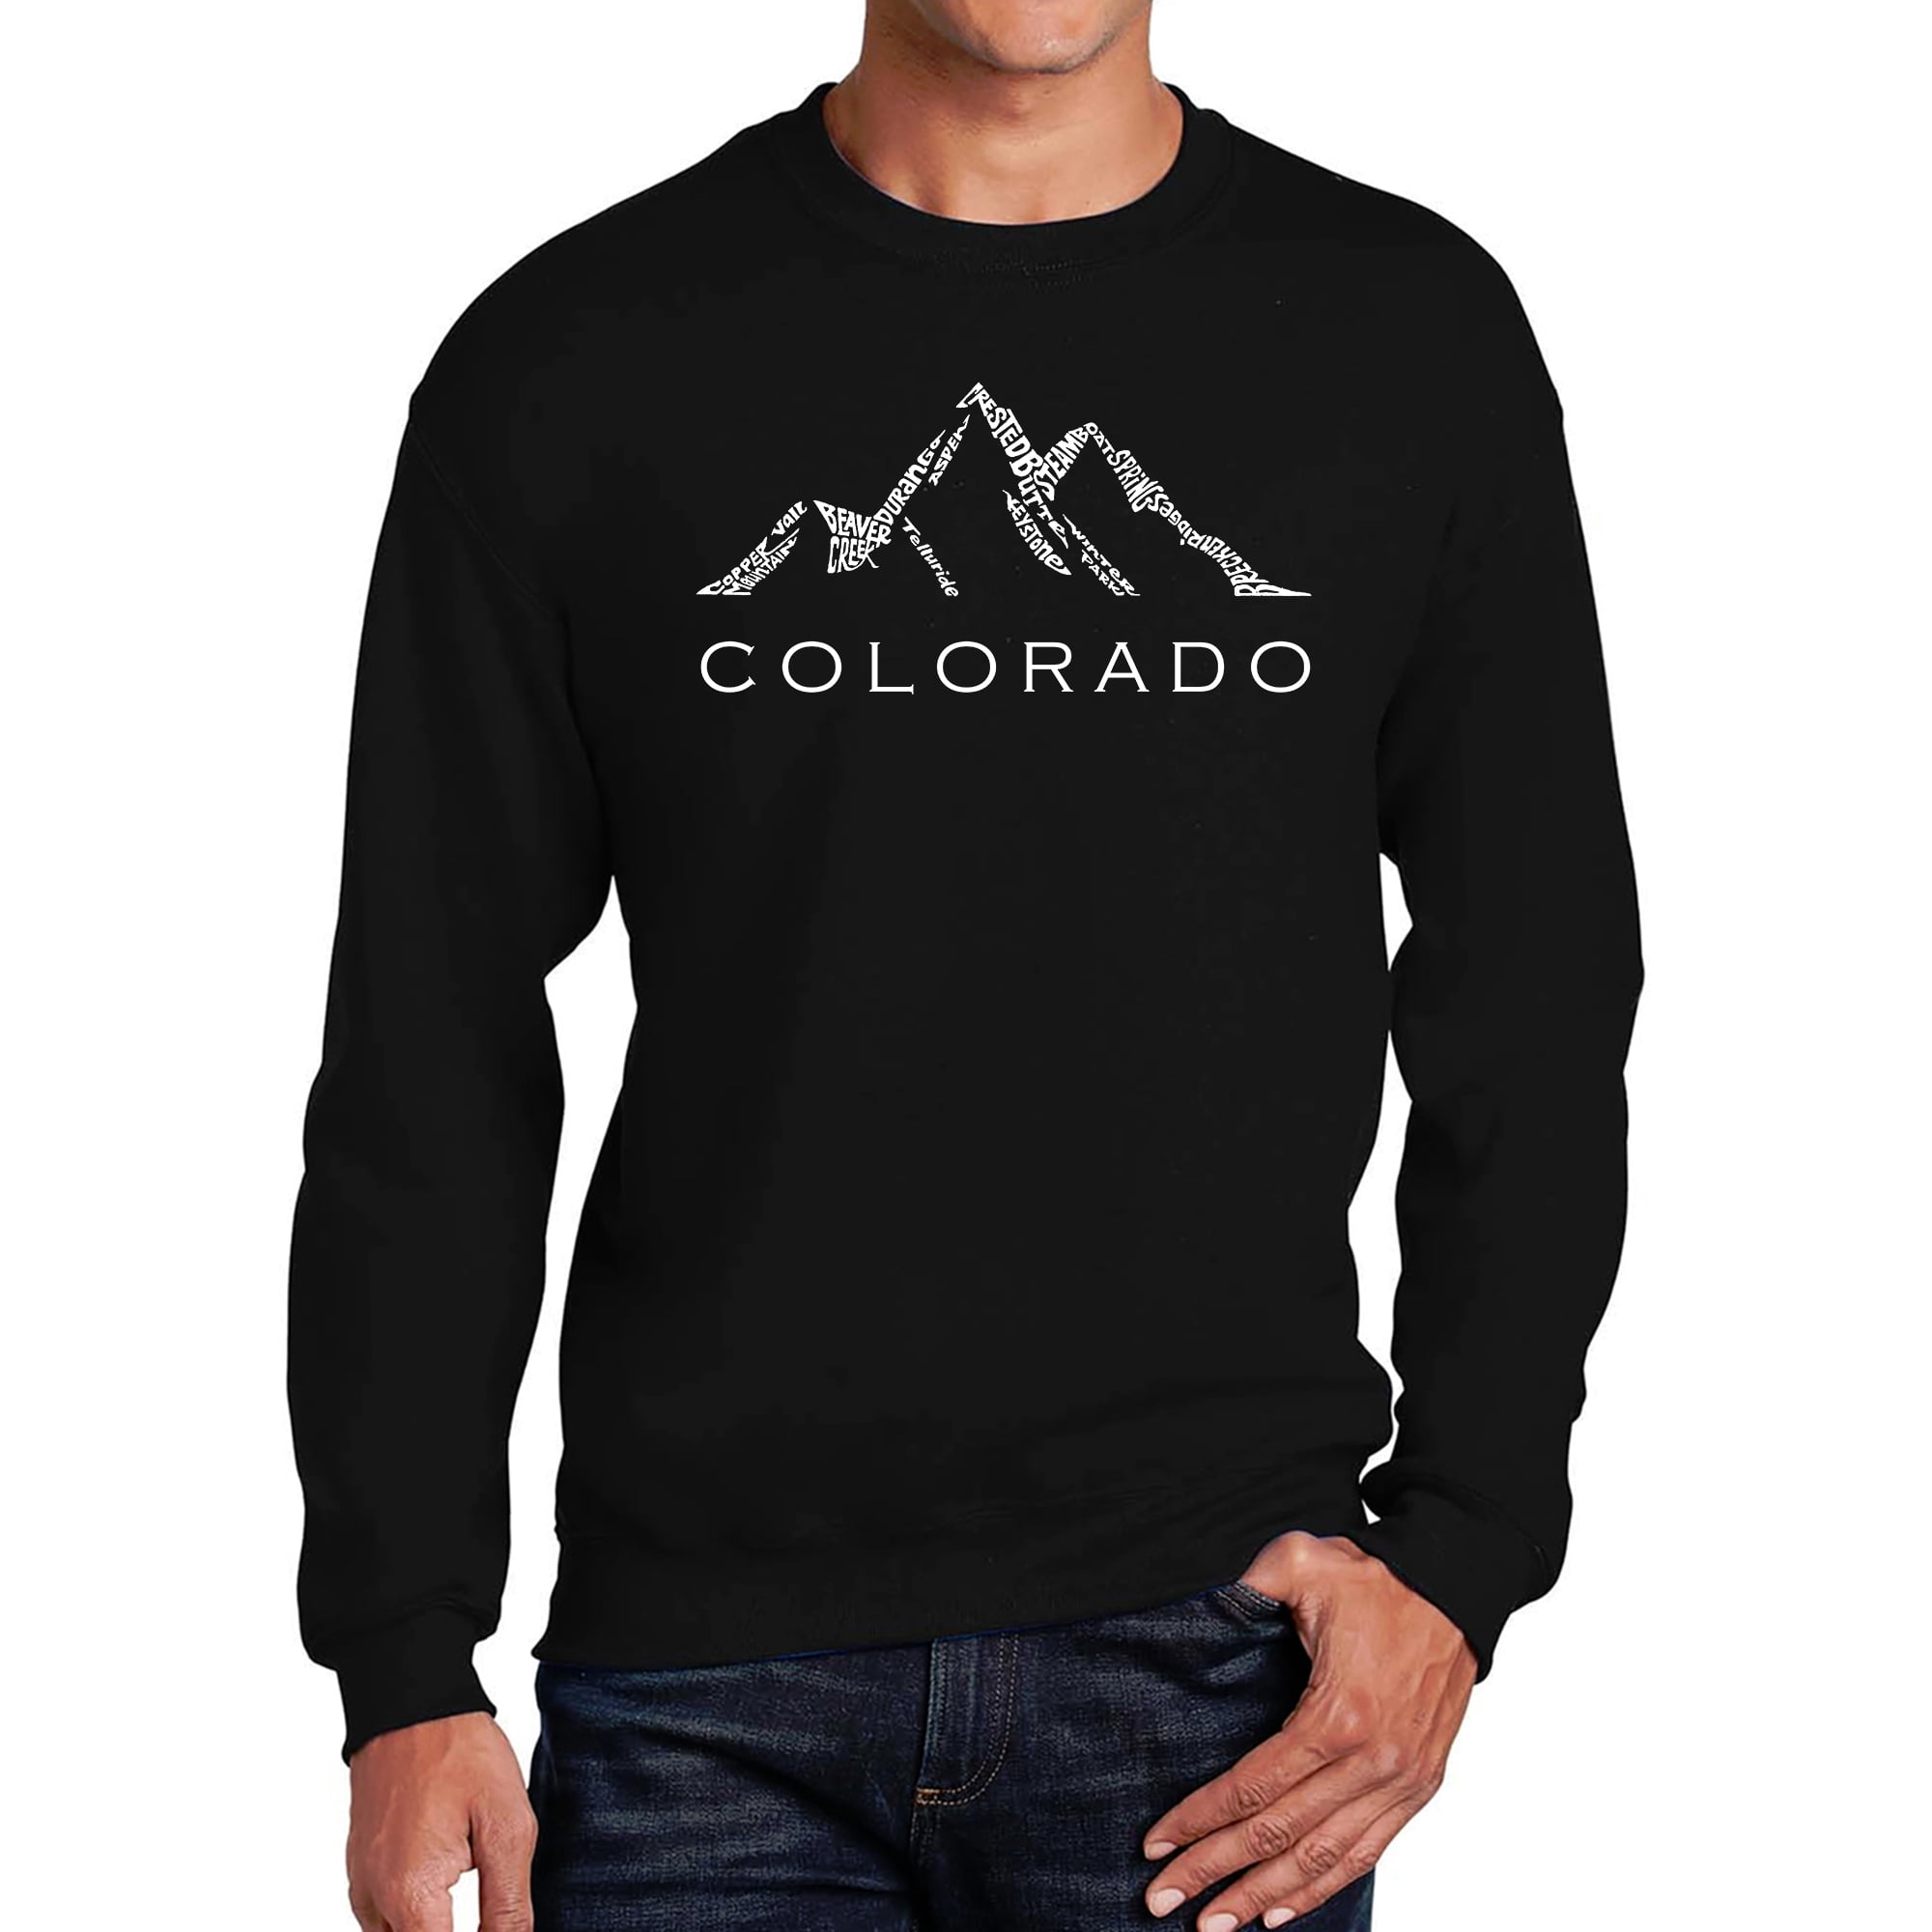 Colorado Rockies skull Los Rockies shirt, hoodie, sweater and v-neck t-shirt